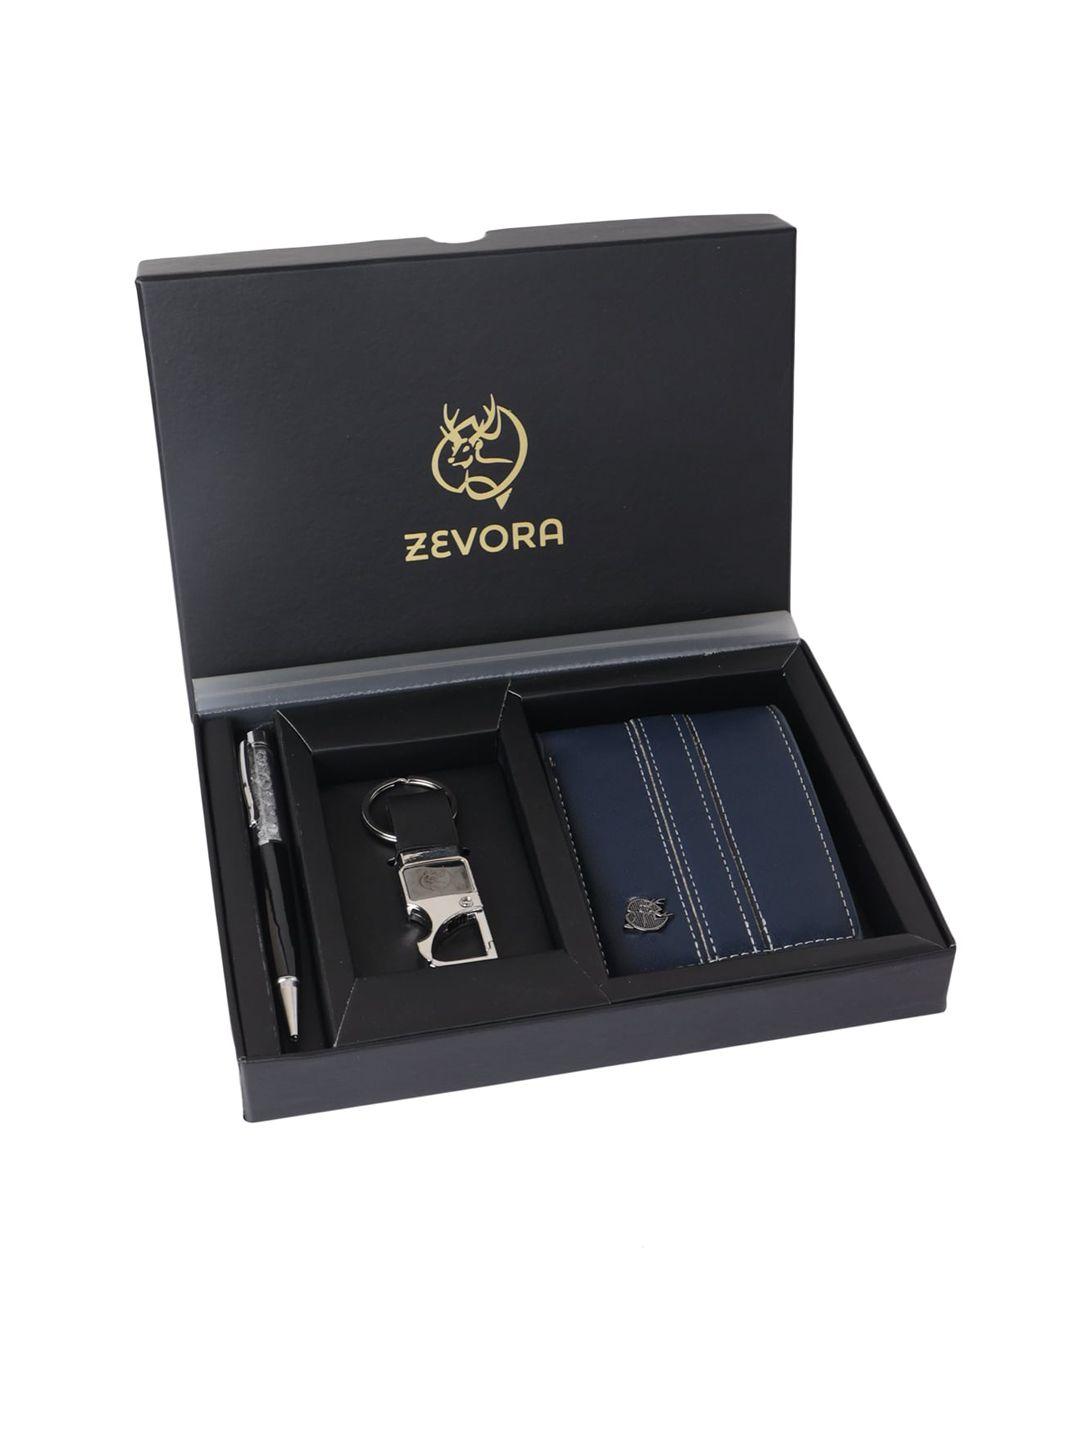 zevora men leather accessory gift set